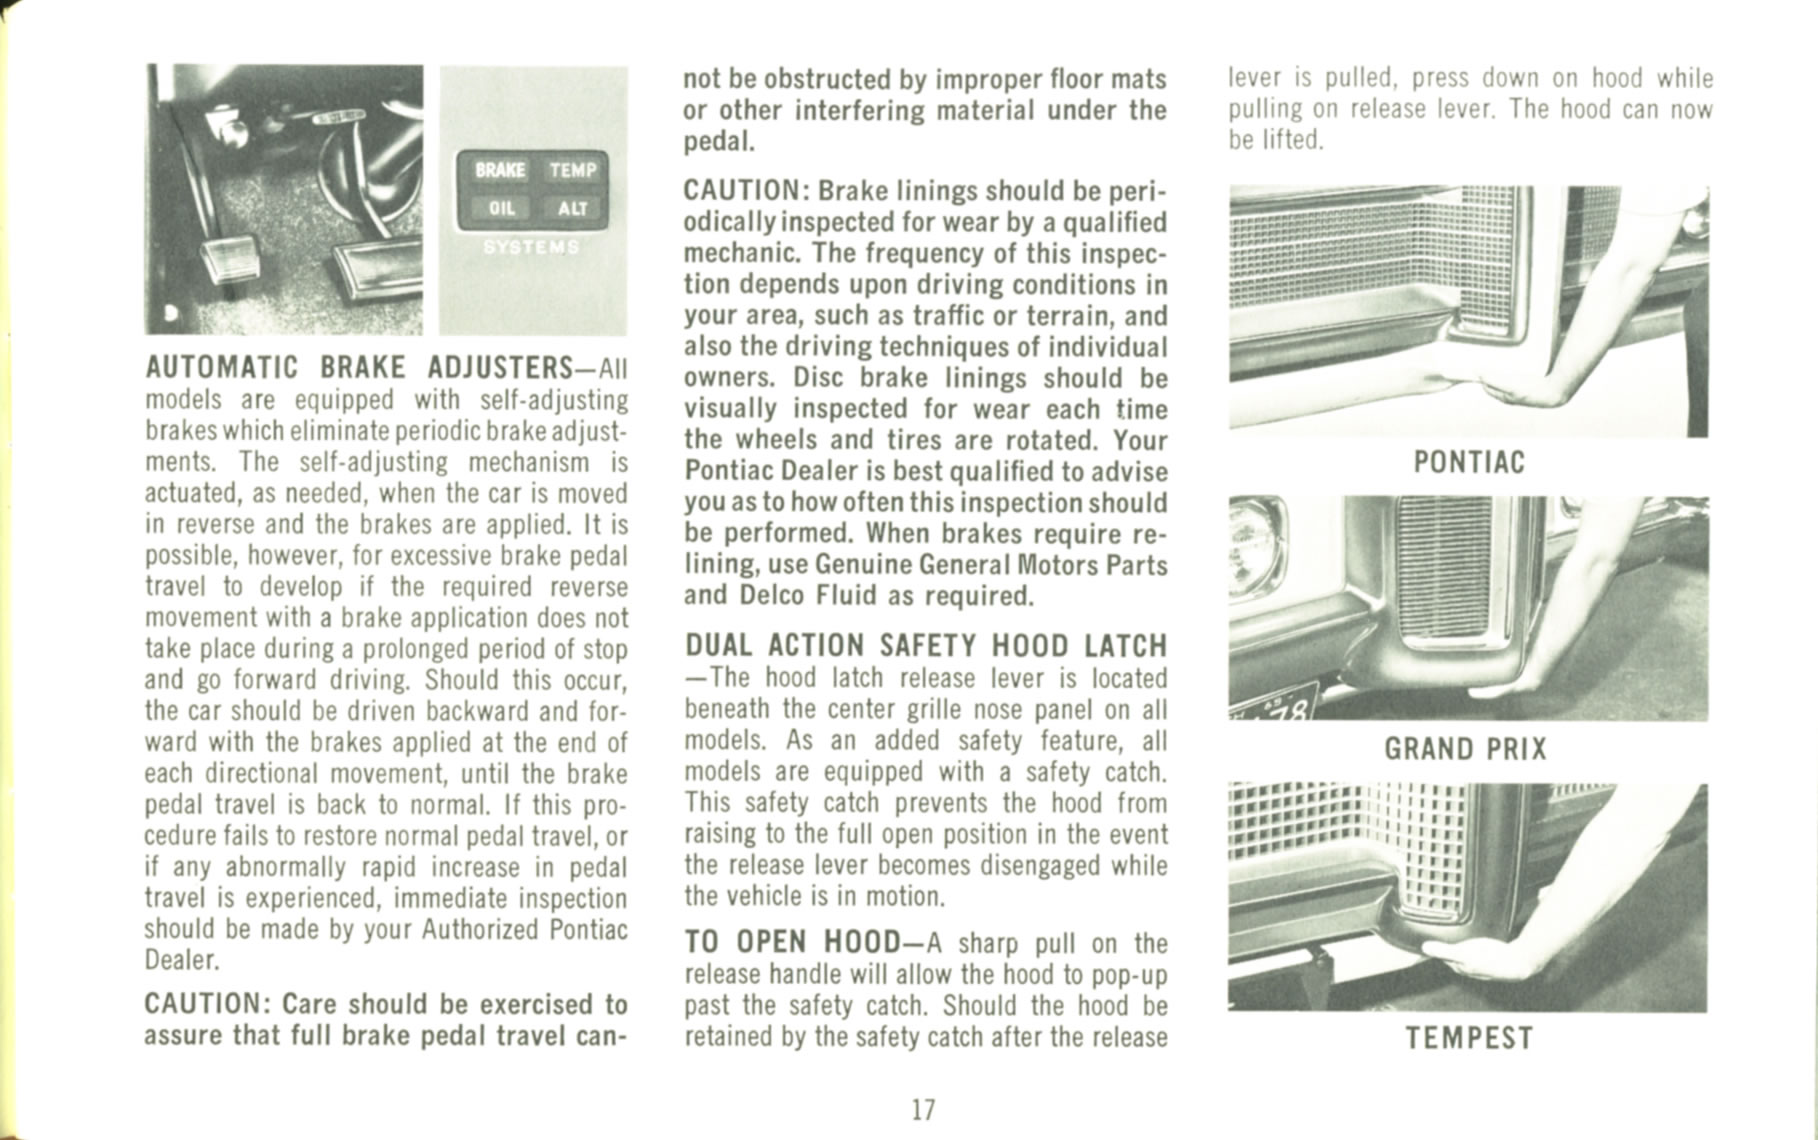 1969 Pontiac Owners Manual-17